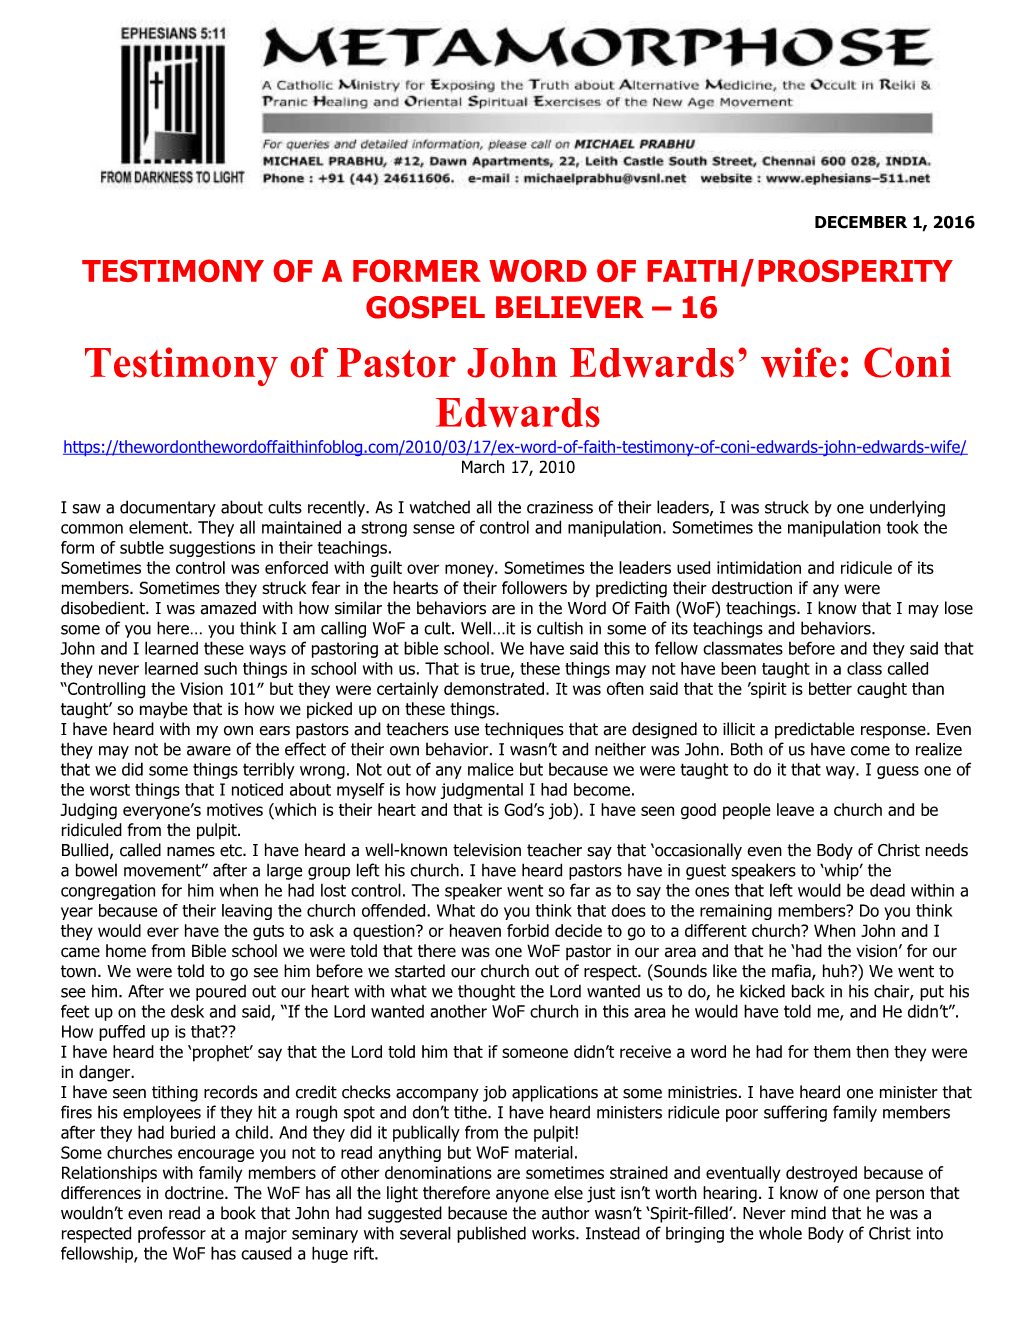 Testimony of a Former Word of Faith/Prosperity Gospel Believer 16